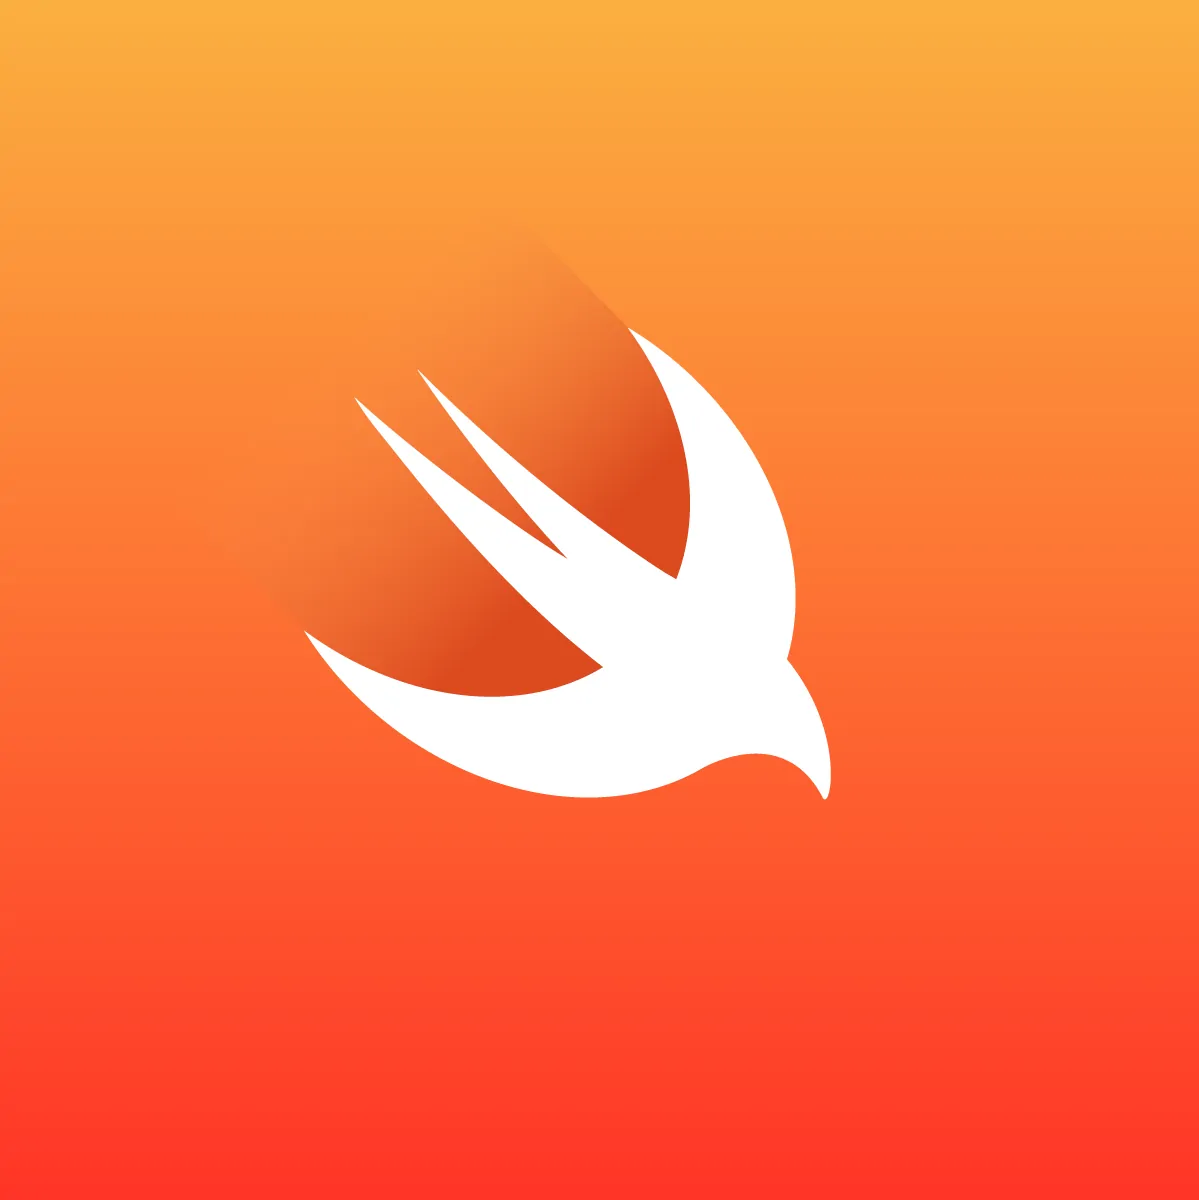 Swift ios app development course